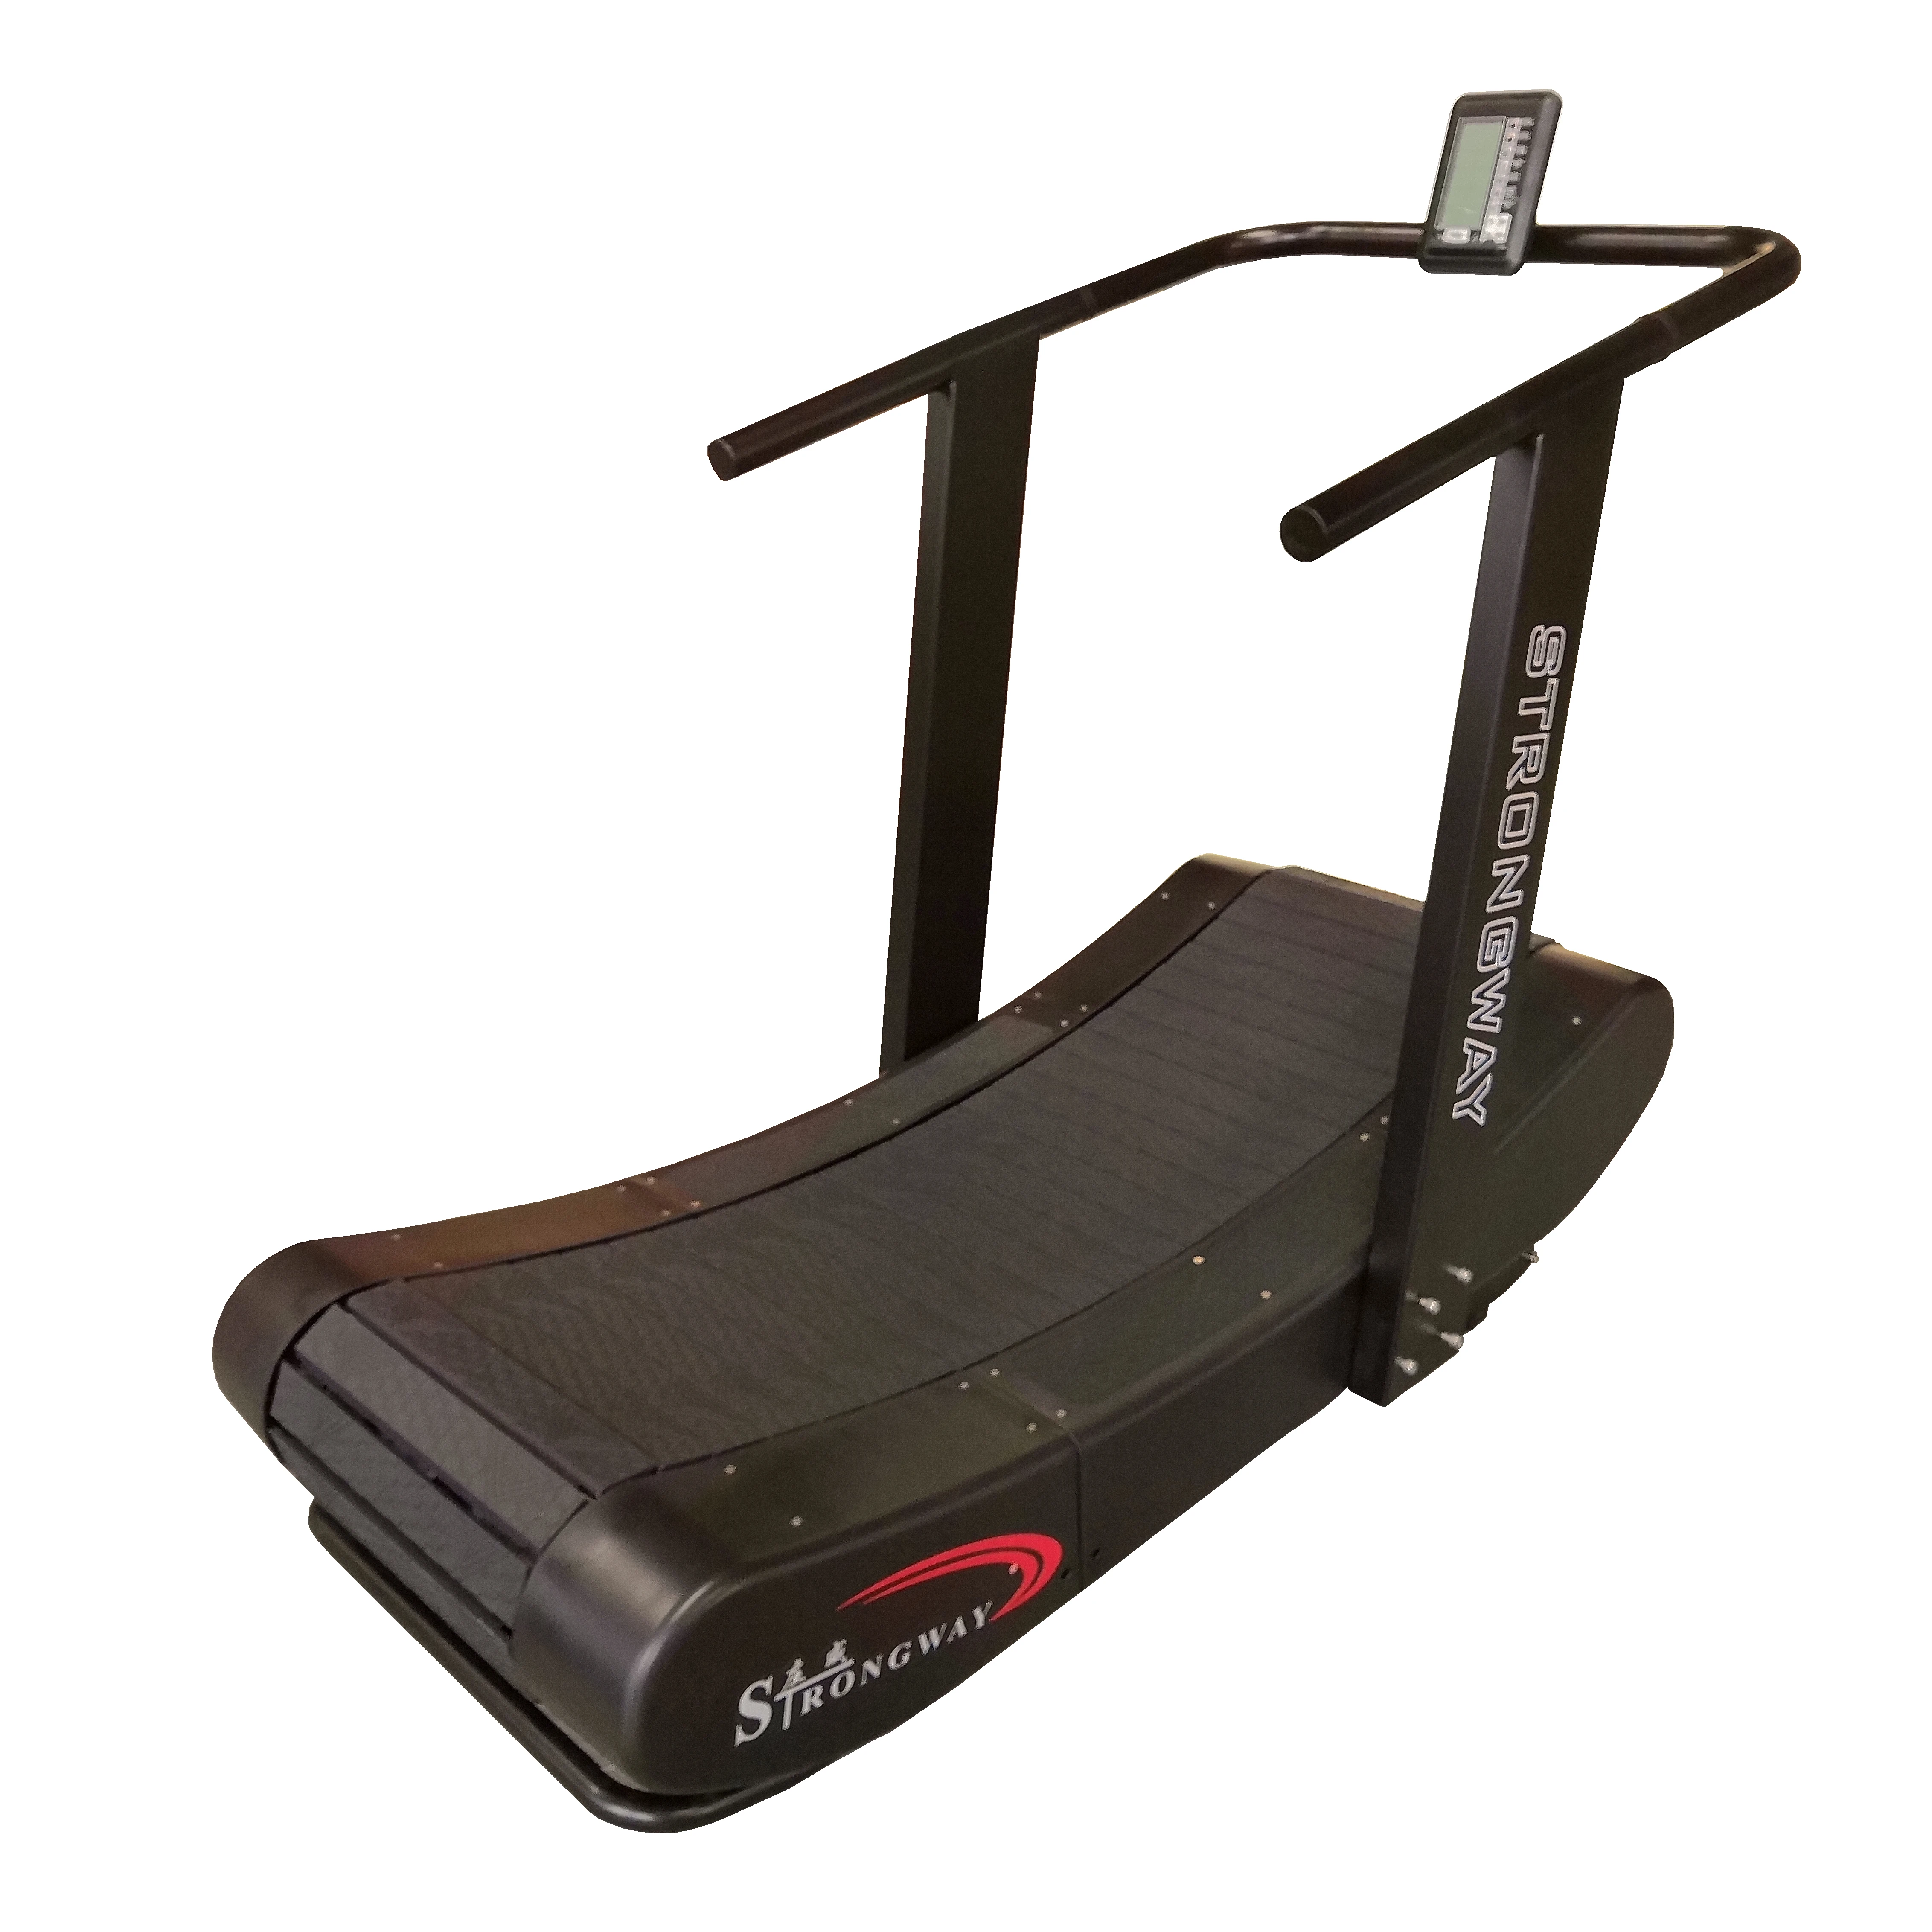 

air runner treadmill running machine woodway curved treadmill Non Motorized Air Runner Woodway Curved Manual Treadmill, Black